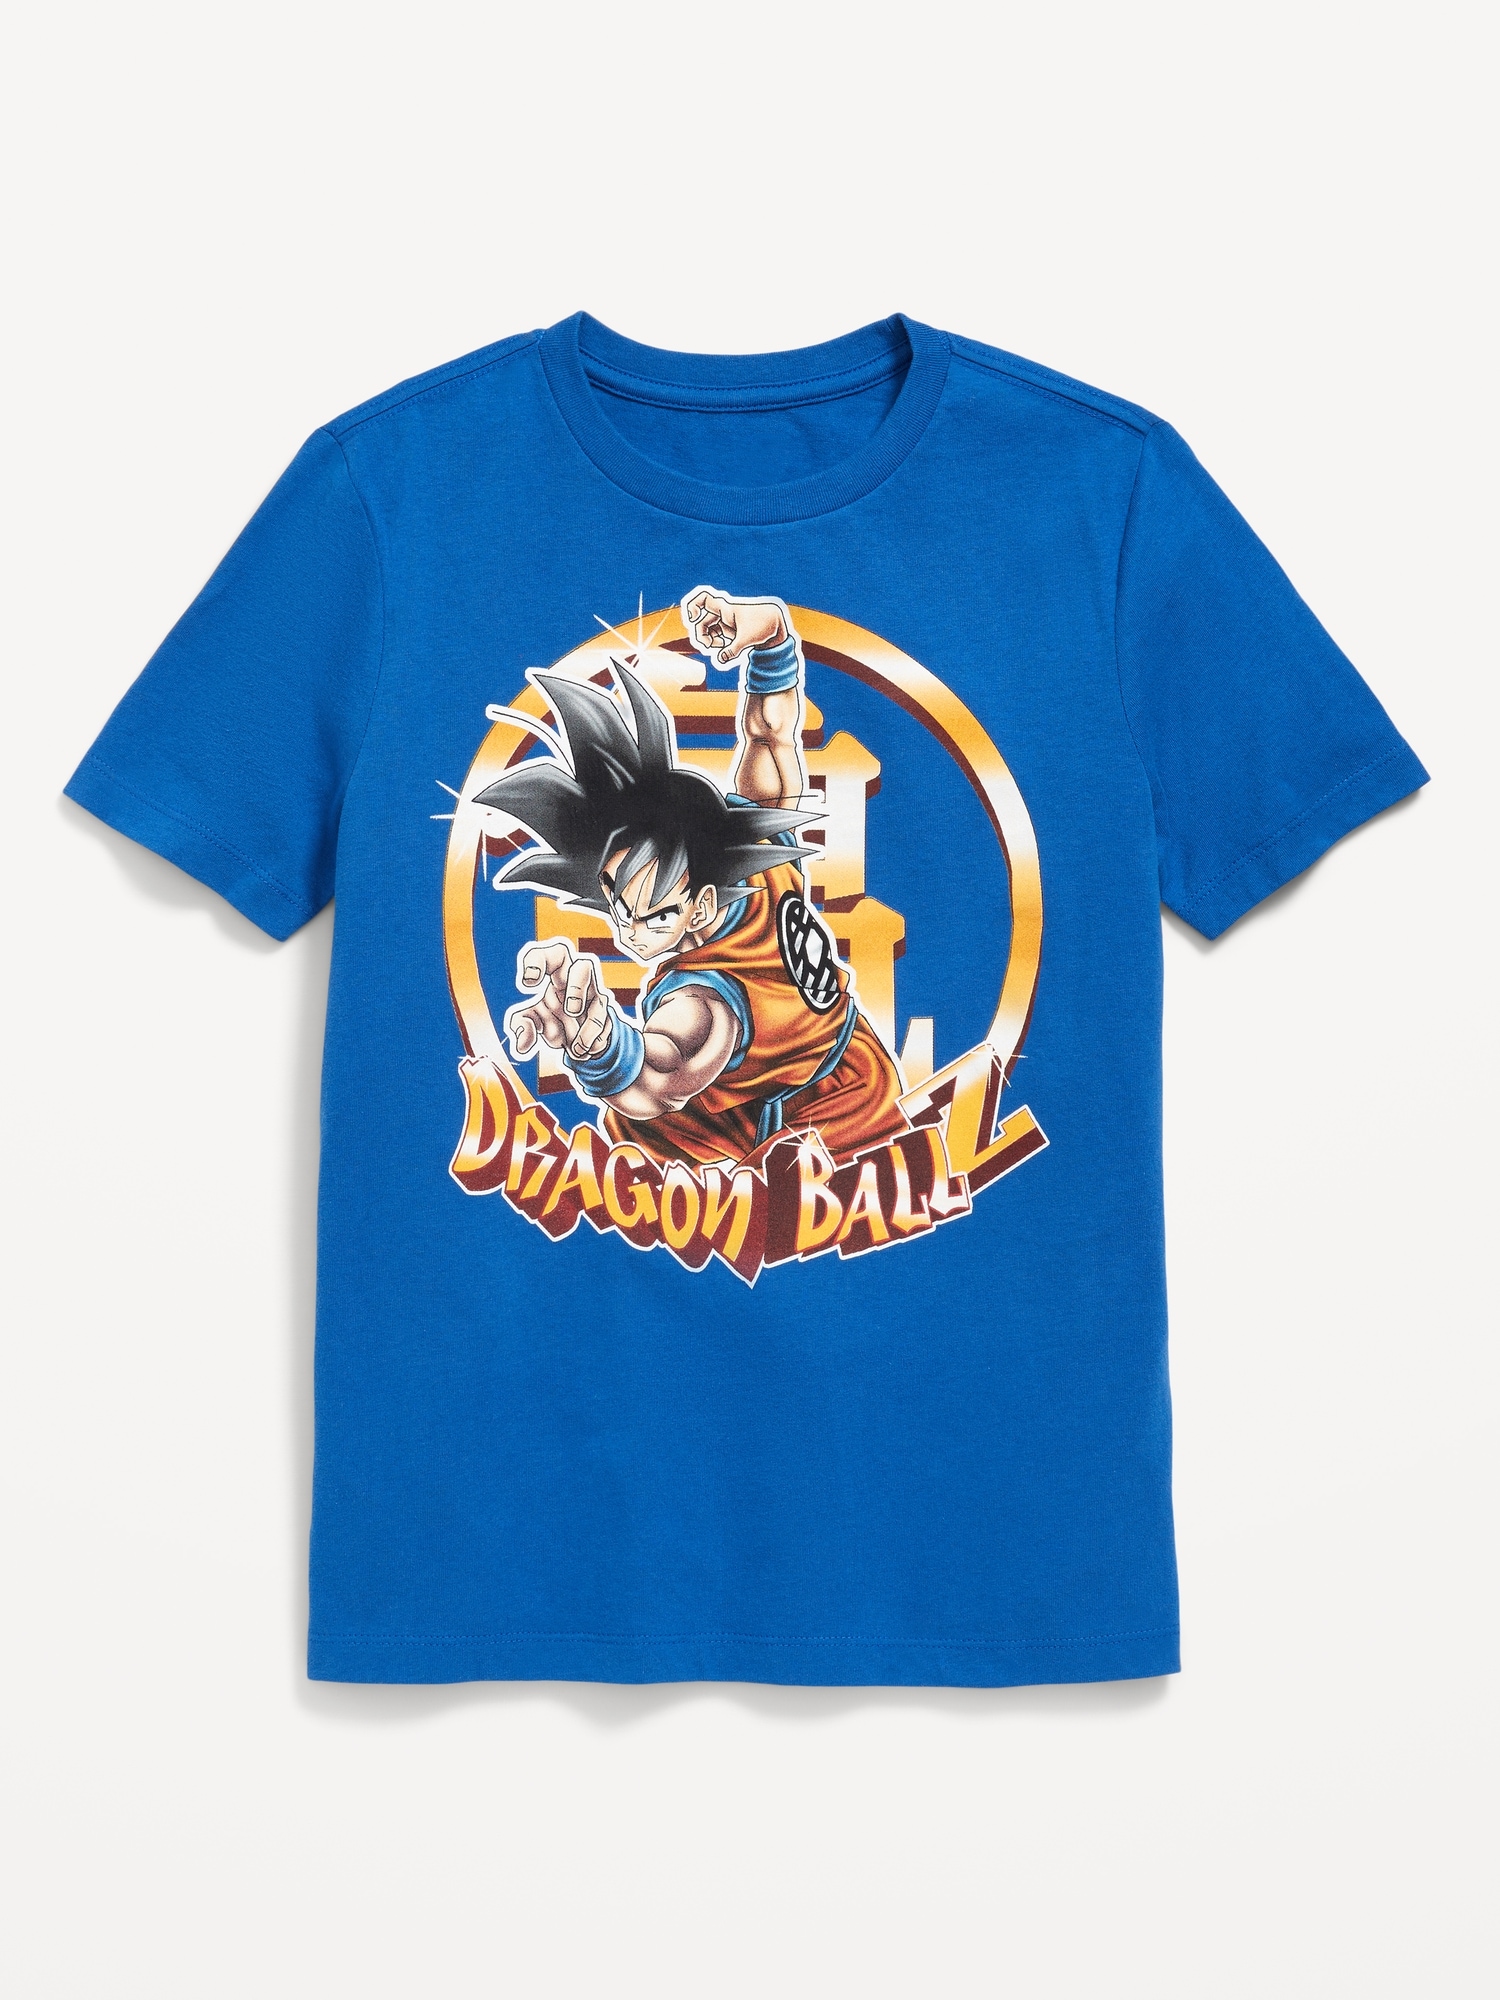 Dragon Ball Z™ Gender-Neutral Graphic T-Shirt for Kids